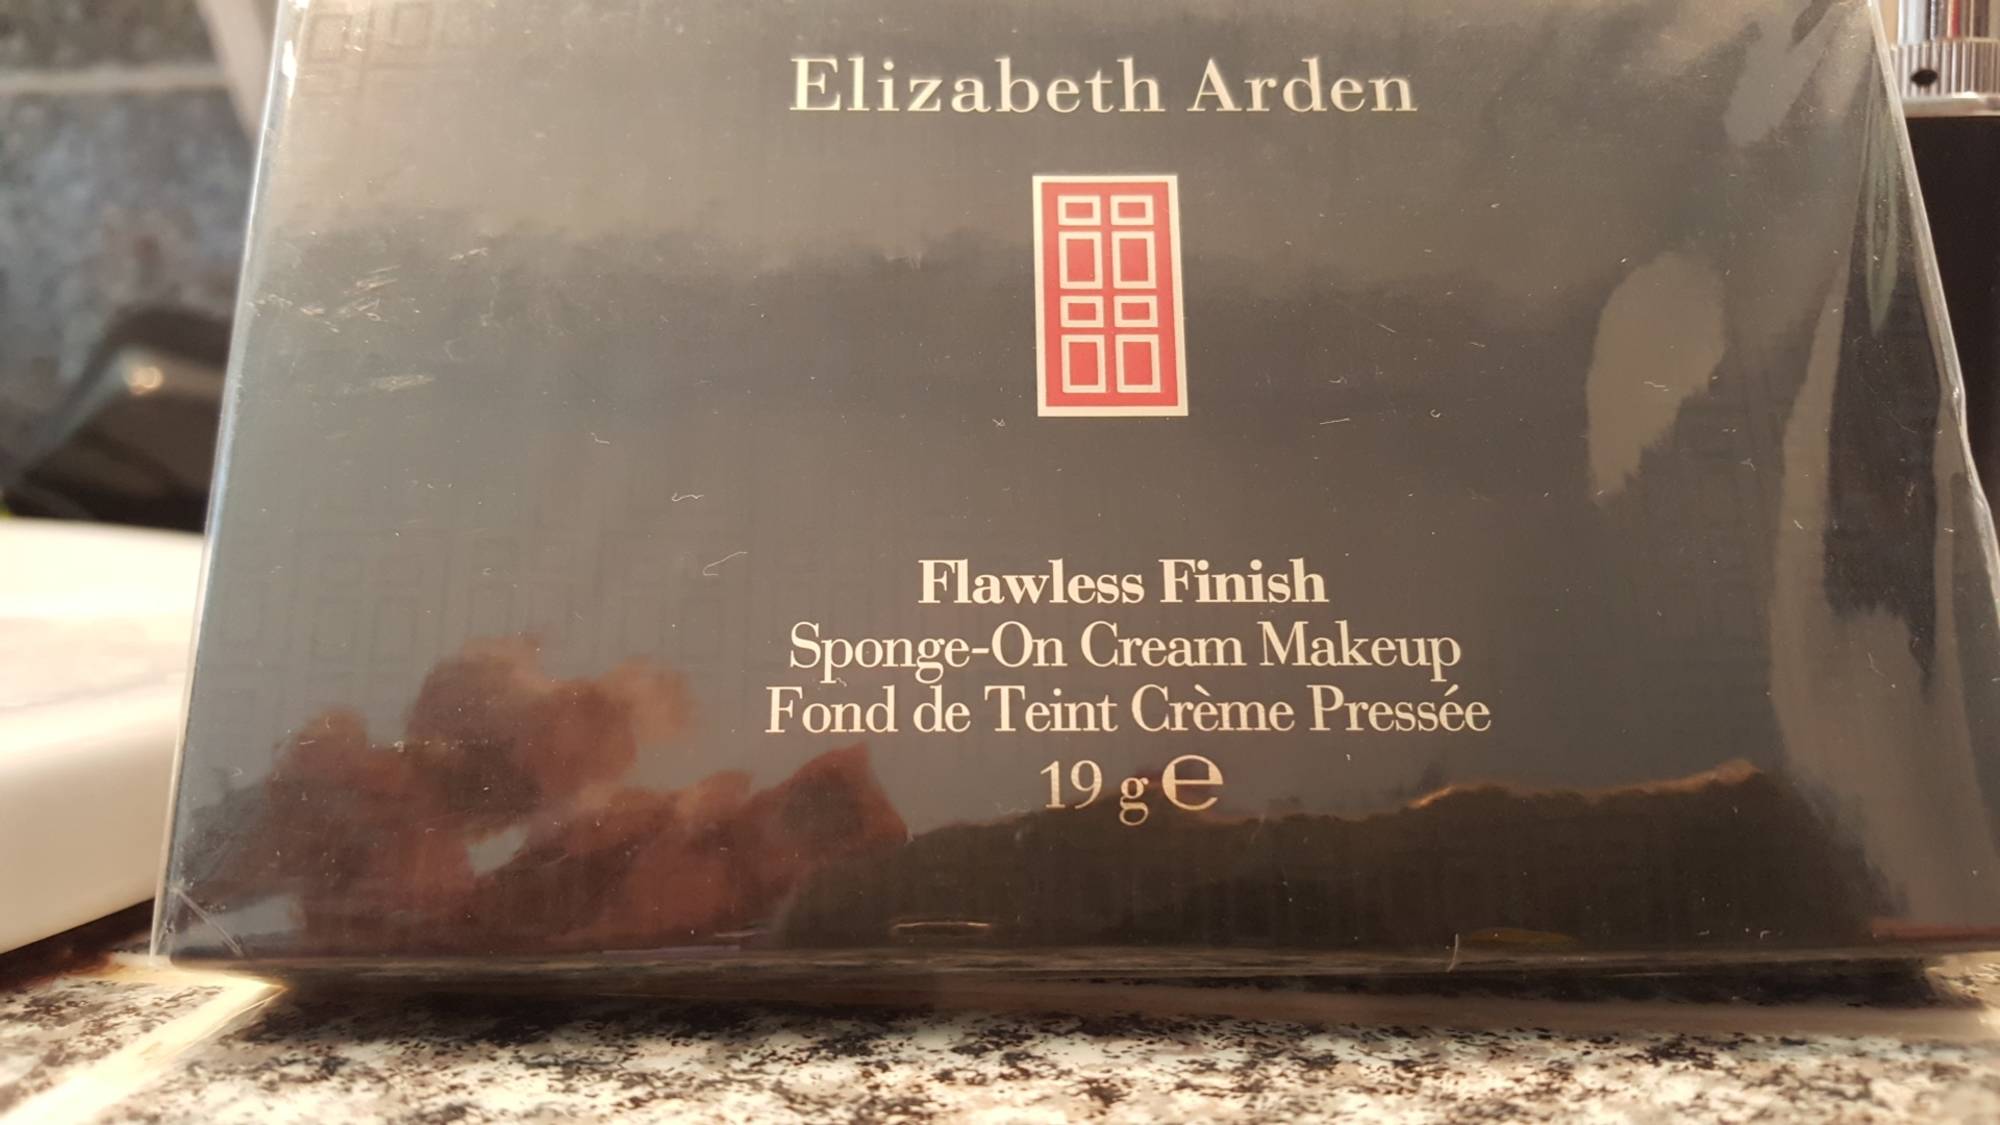 ELIZABETH ARDEN - Flawless finish - Fond de teint crème pressée 